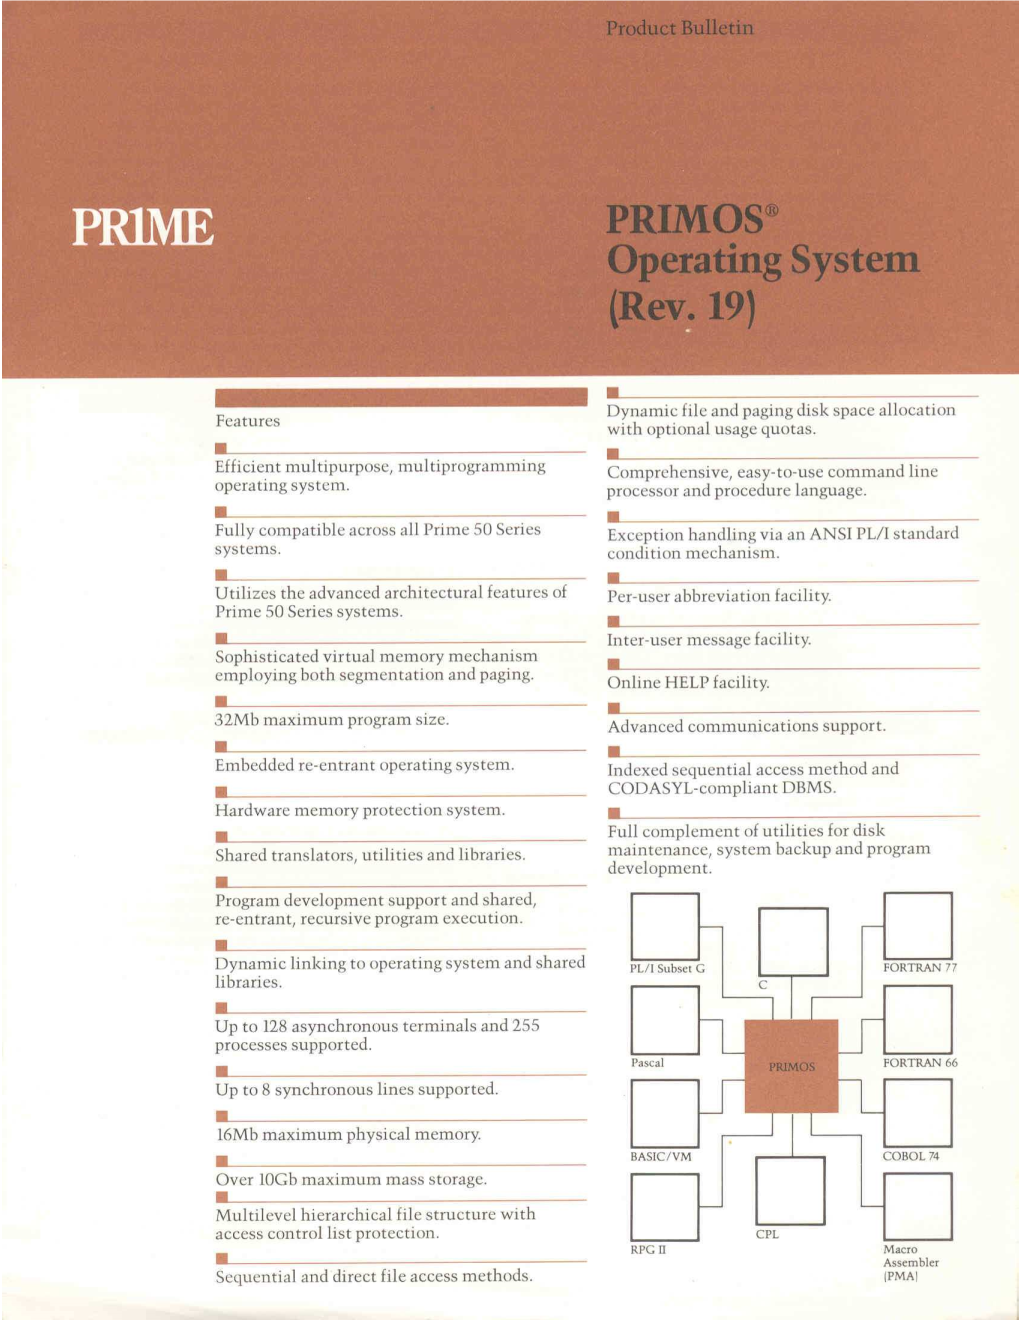 PRIMOS Operating System (Rev